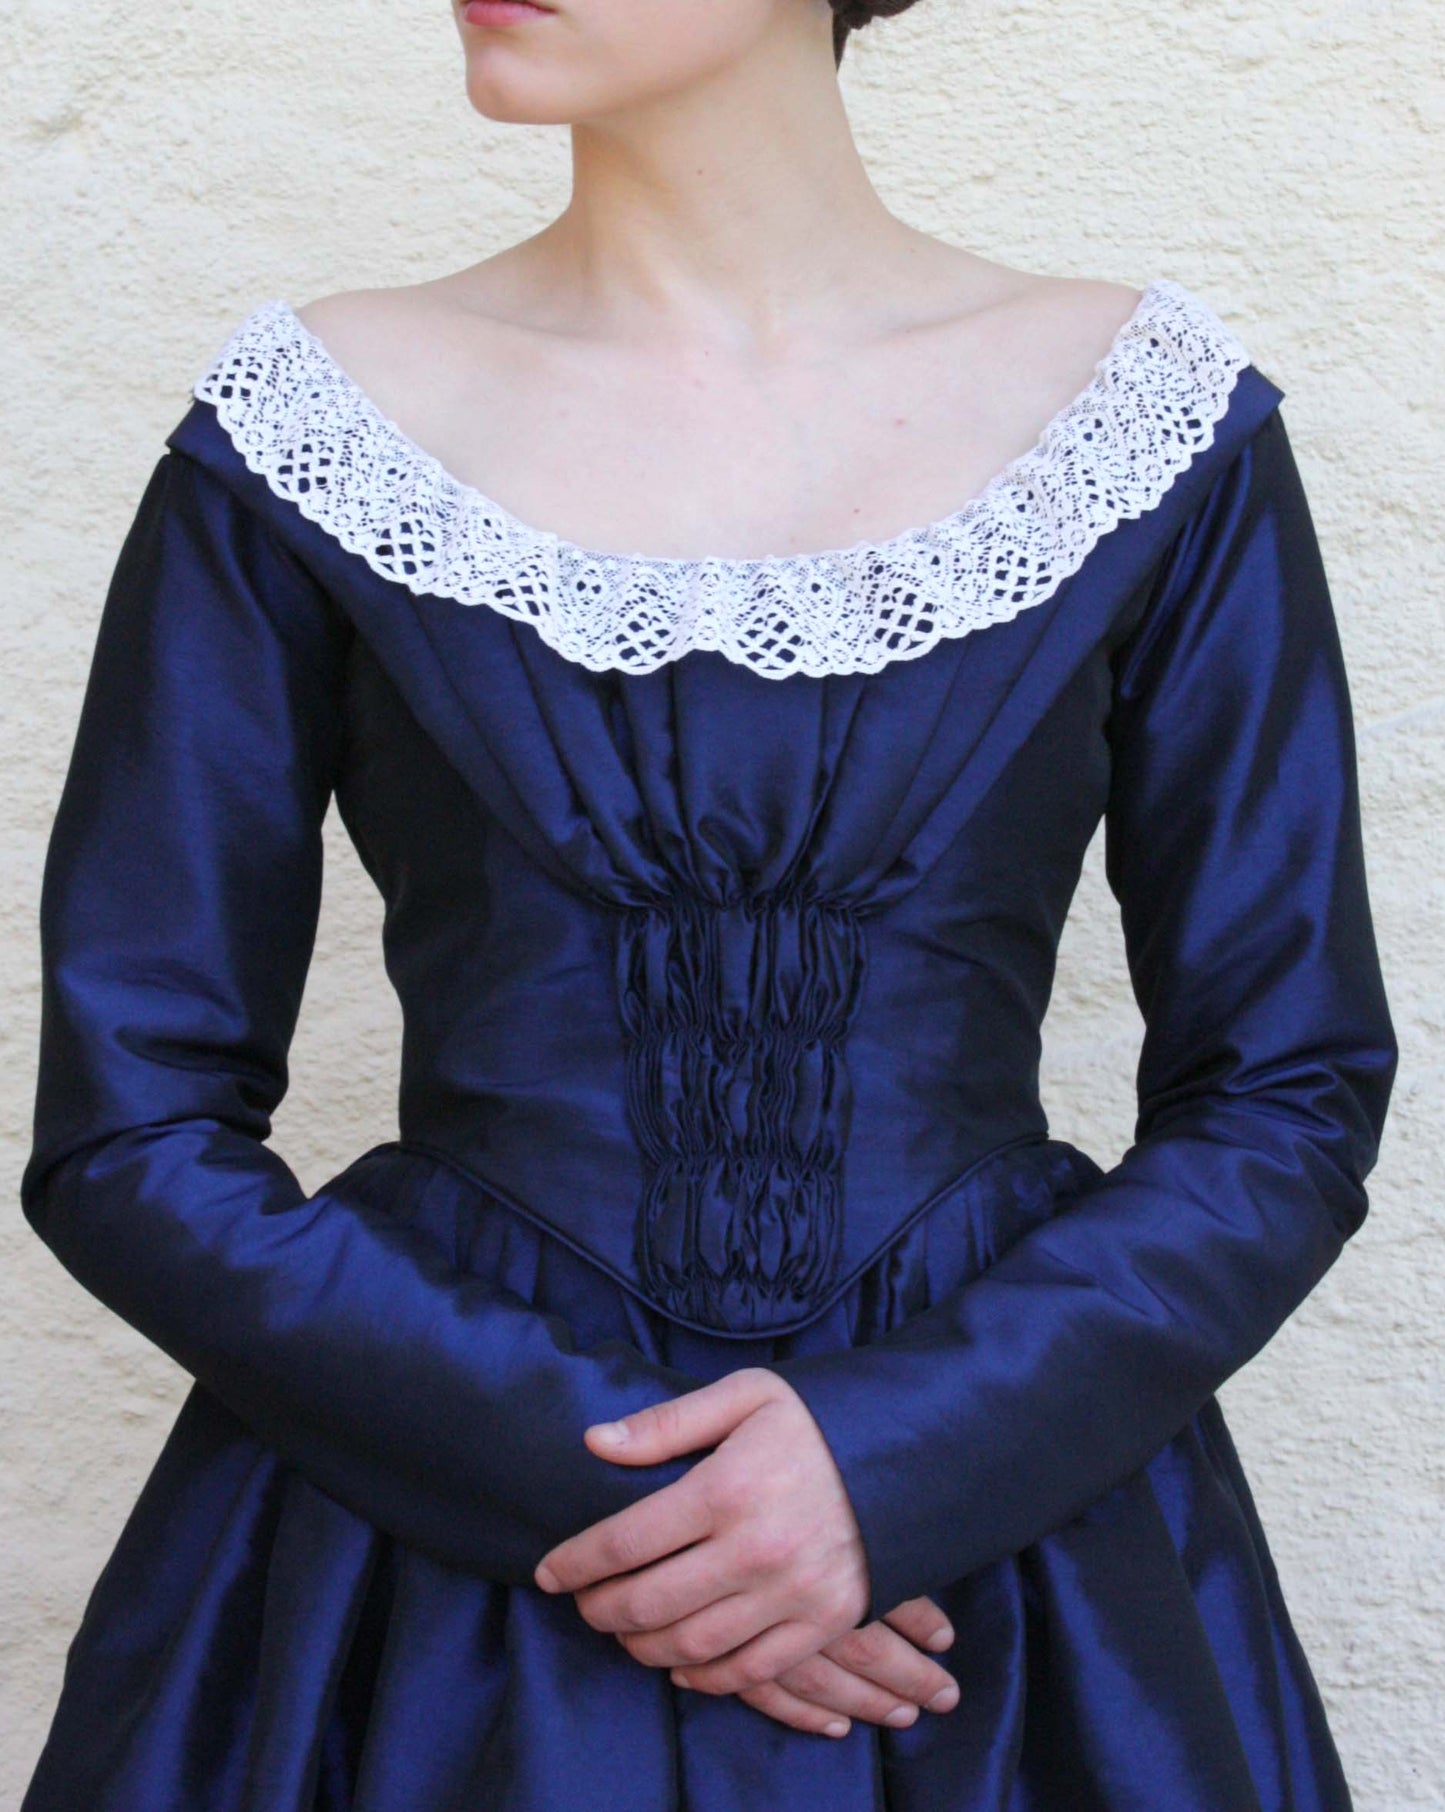 #0421 Day Dress 1837-40 Sewing Pattern Size US 8-30 (EU 34-56) PDF Download